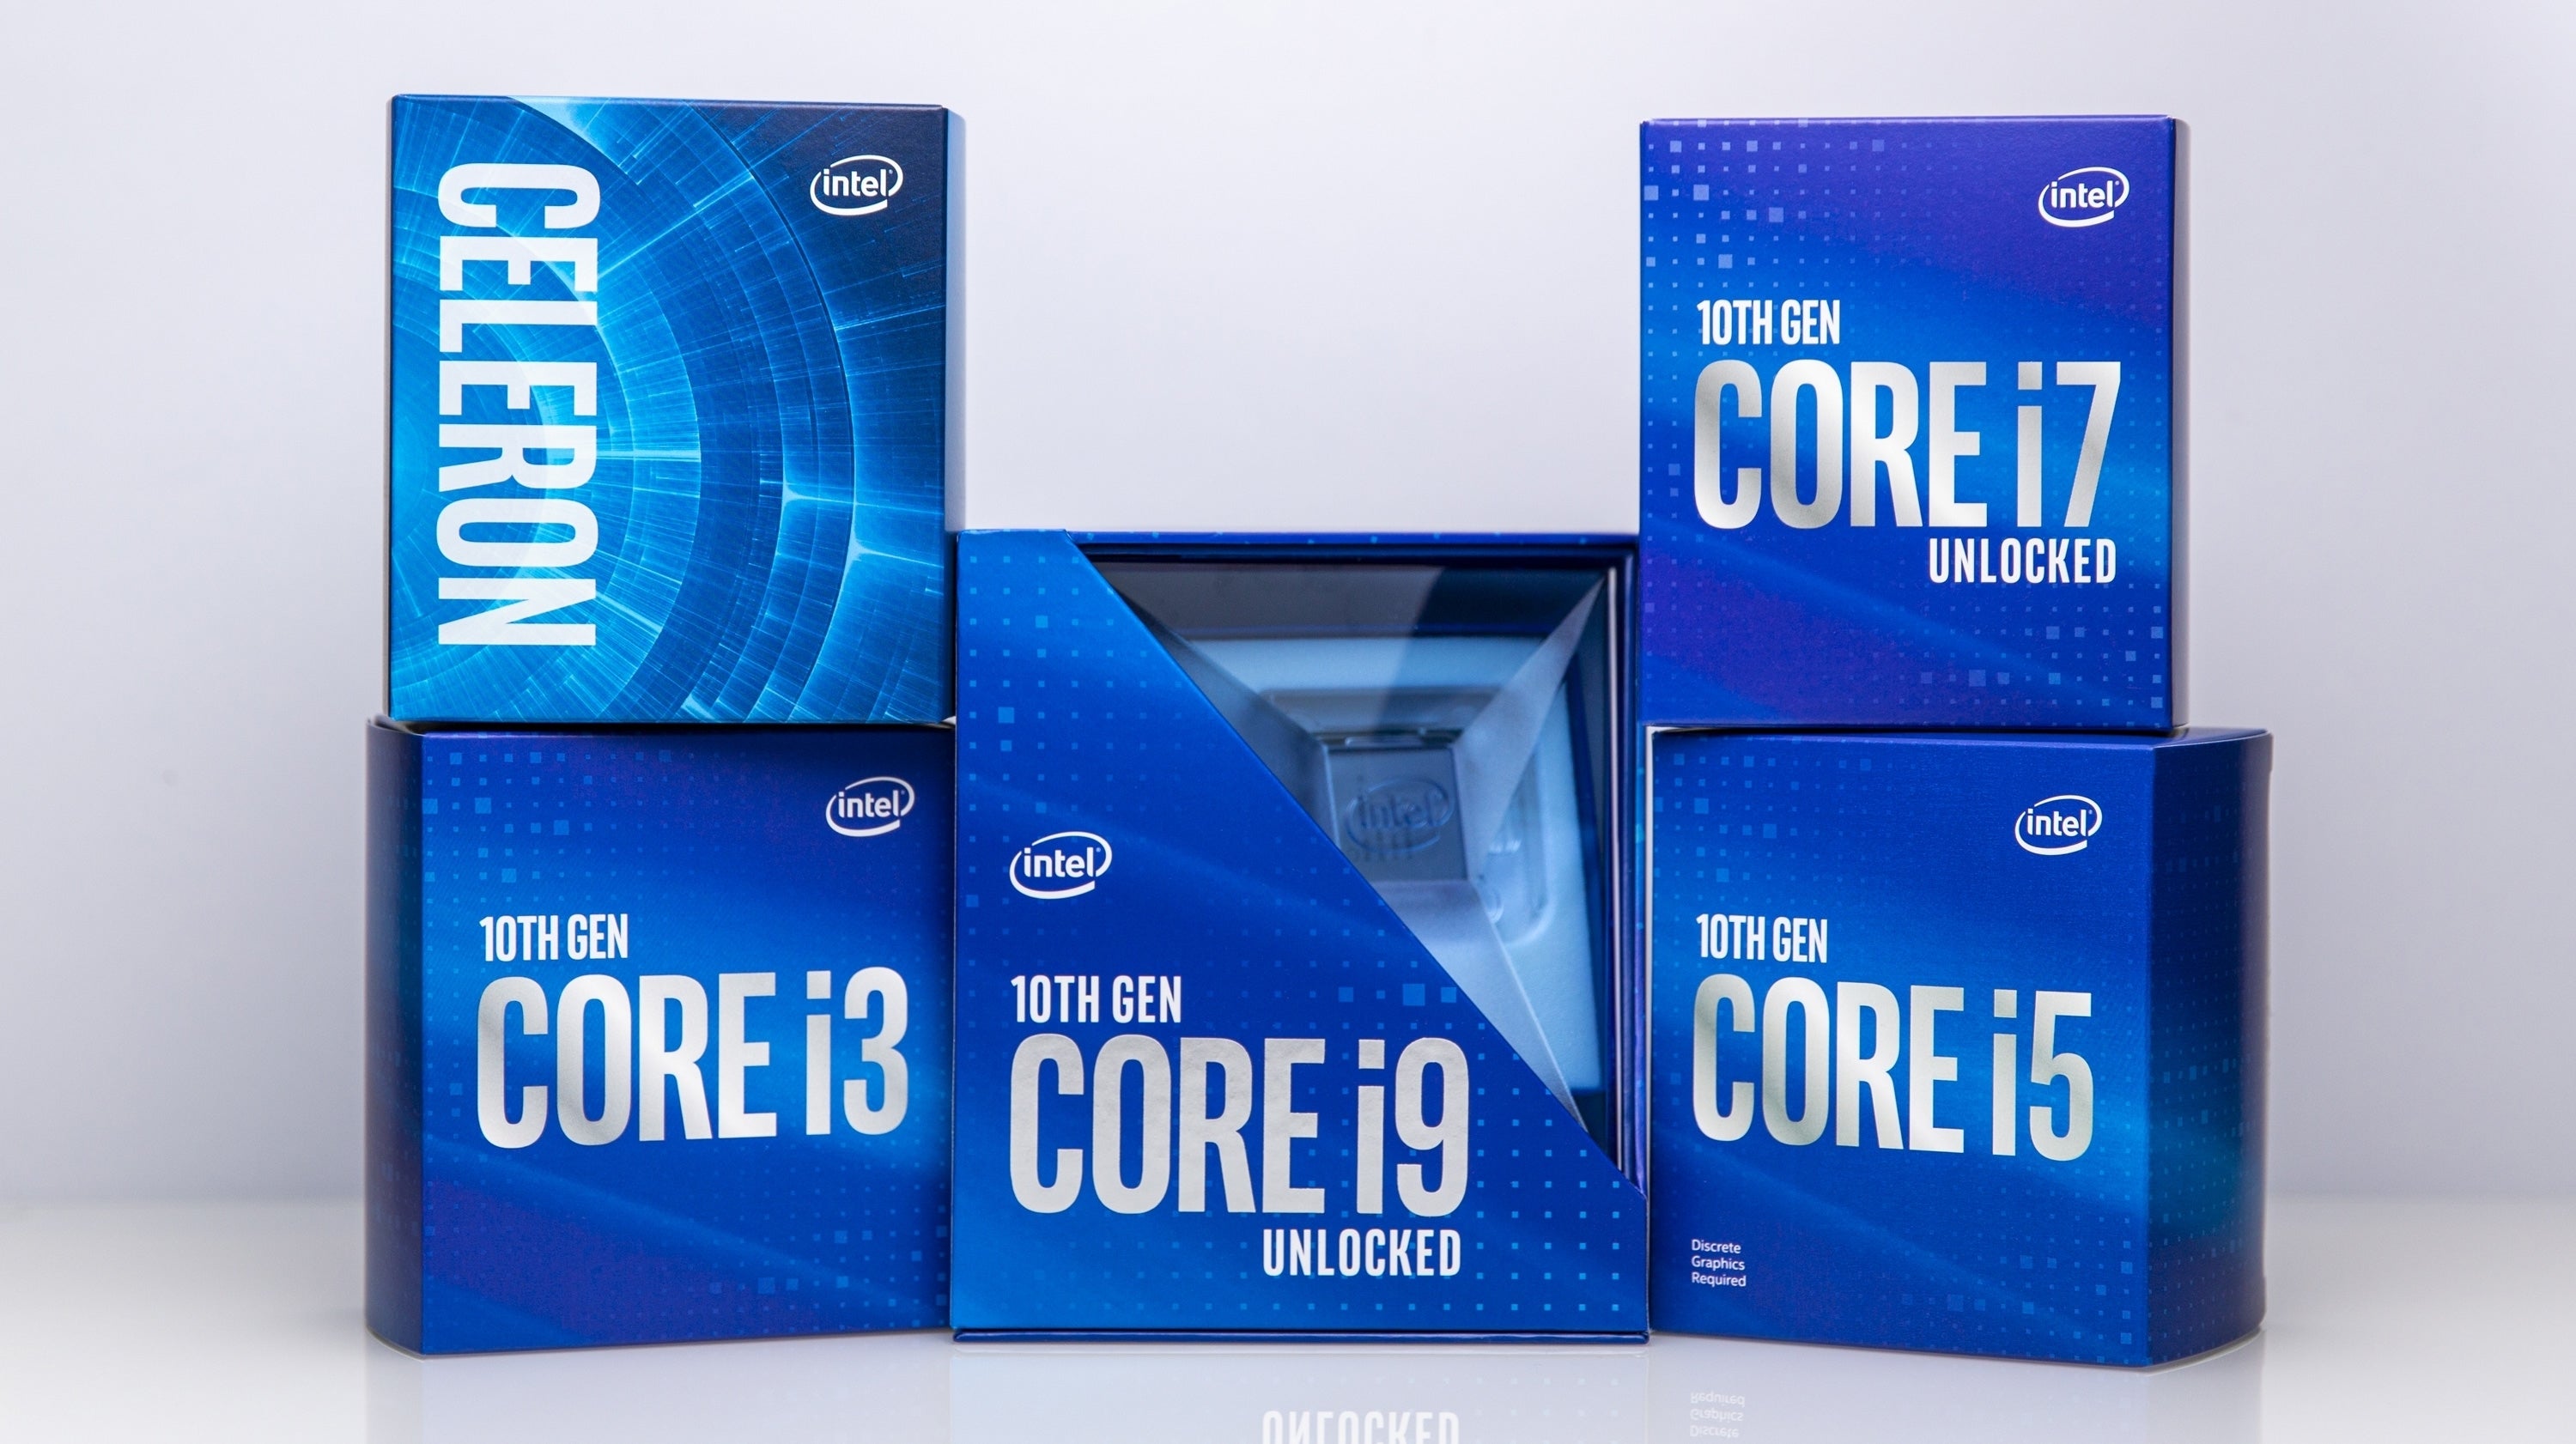 Intel Core i9 10900K BOX